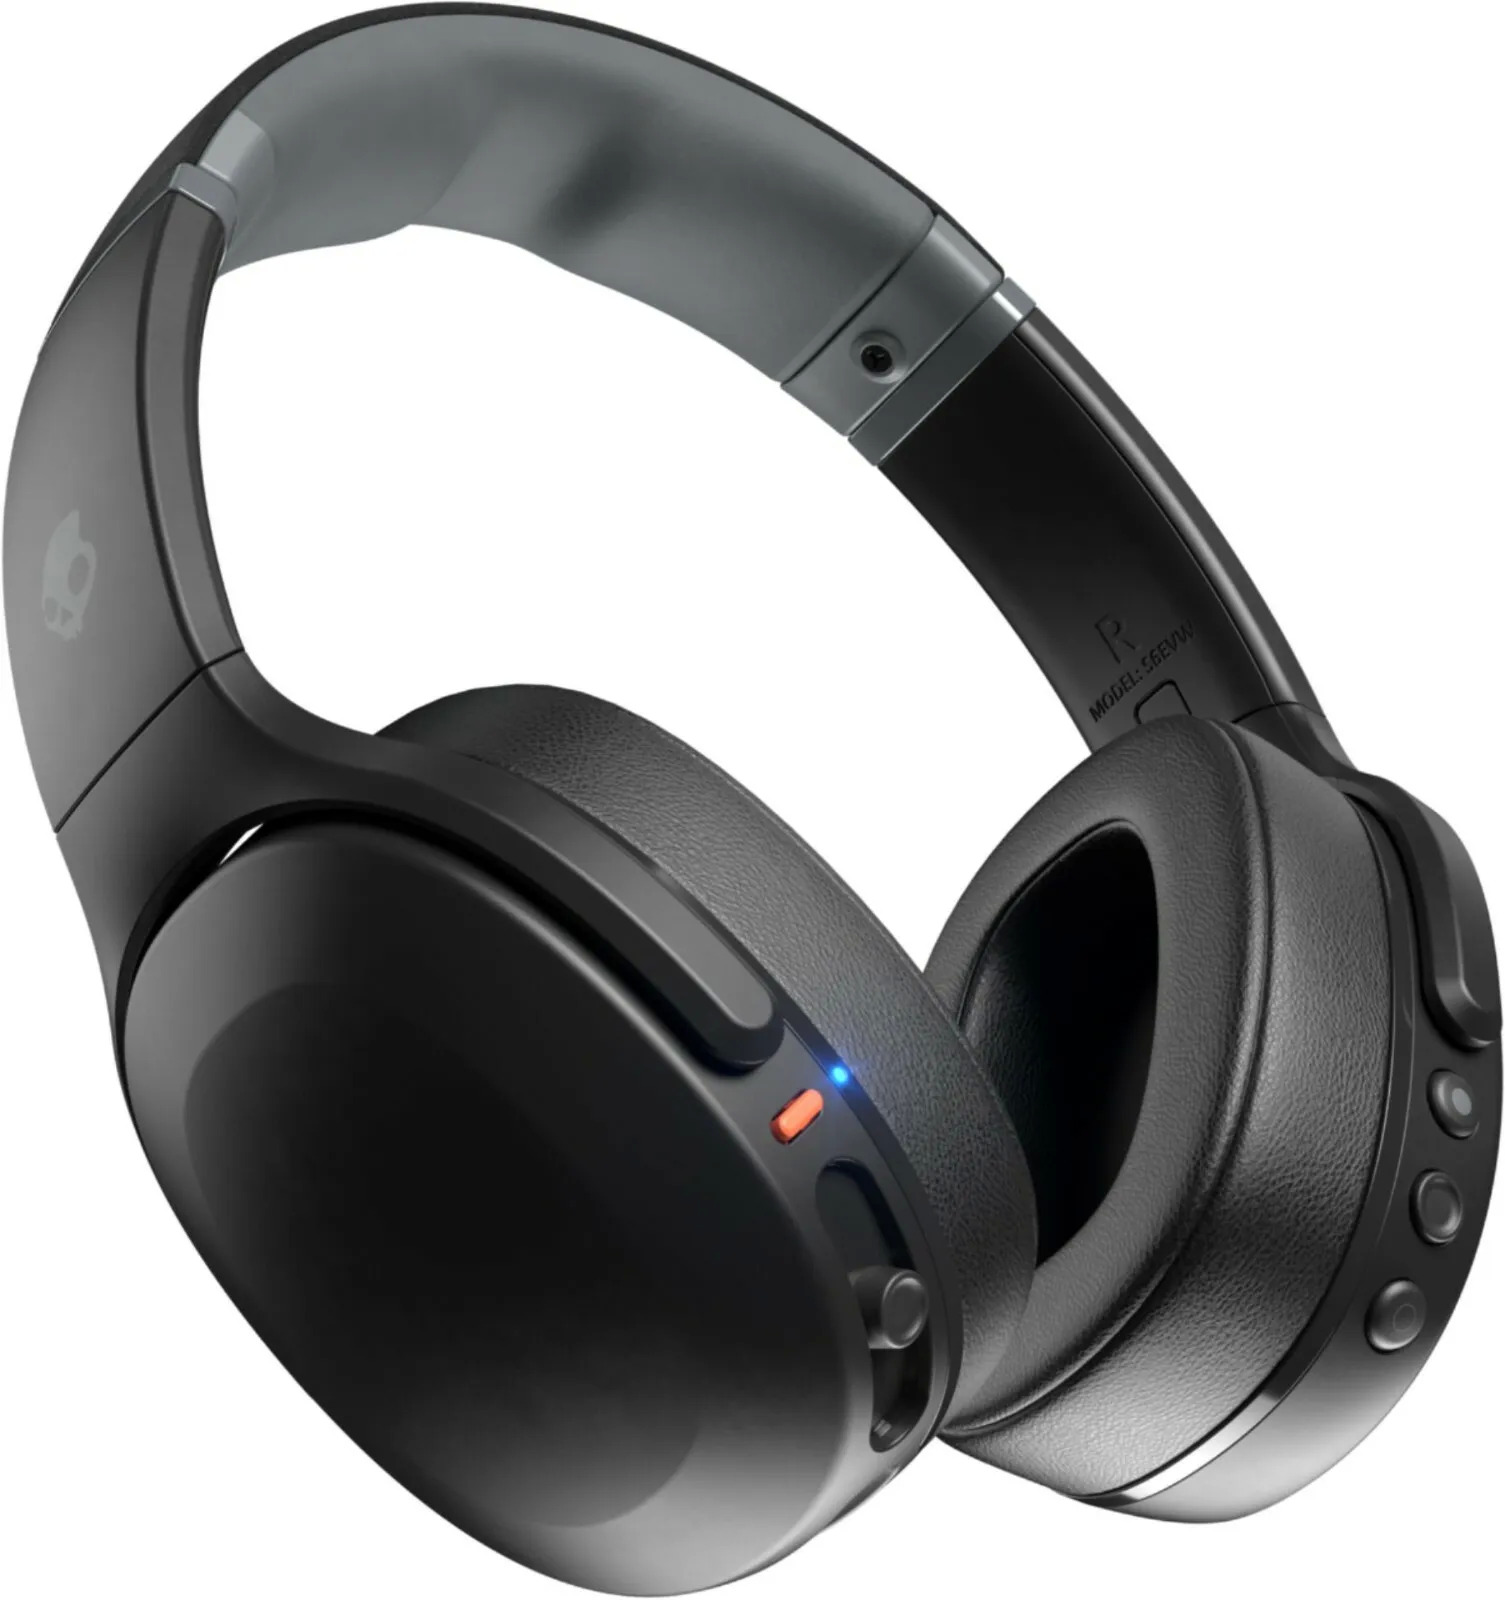 (Certified - Refurbished) Skullcandy CRUSHER EVO Wireless Over-Ear Headset (S6EVW-N740) $79.50 + Free Shipping